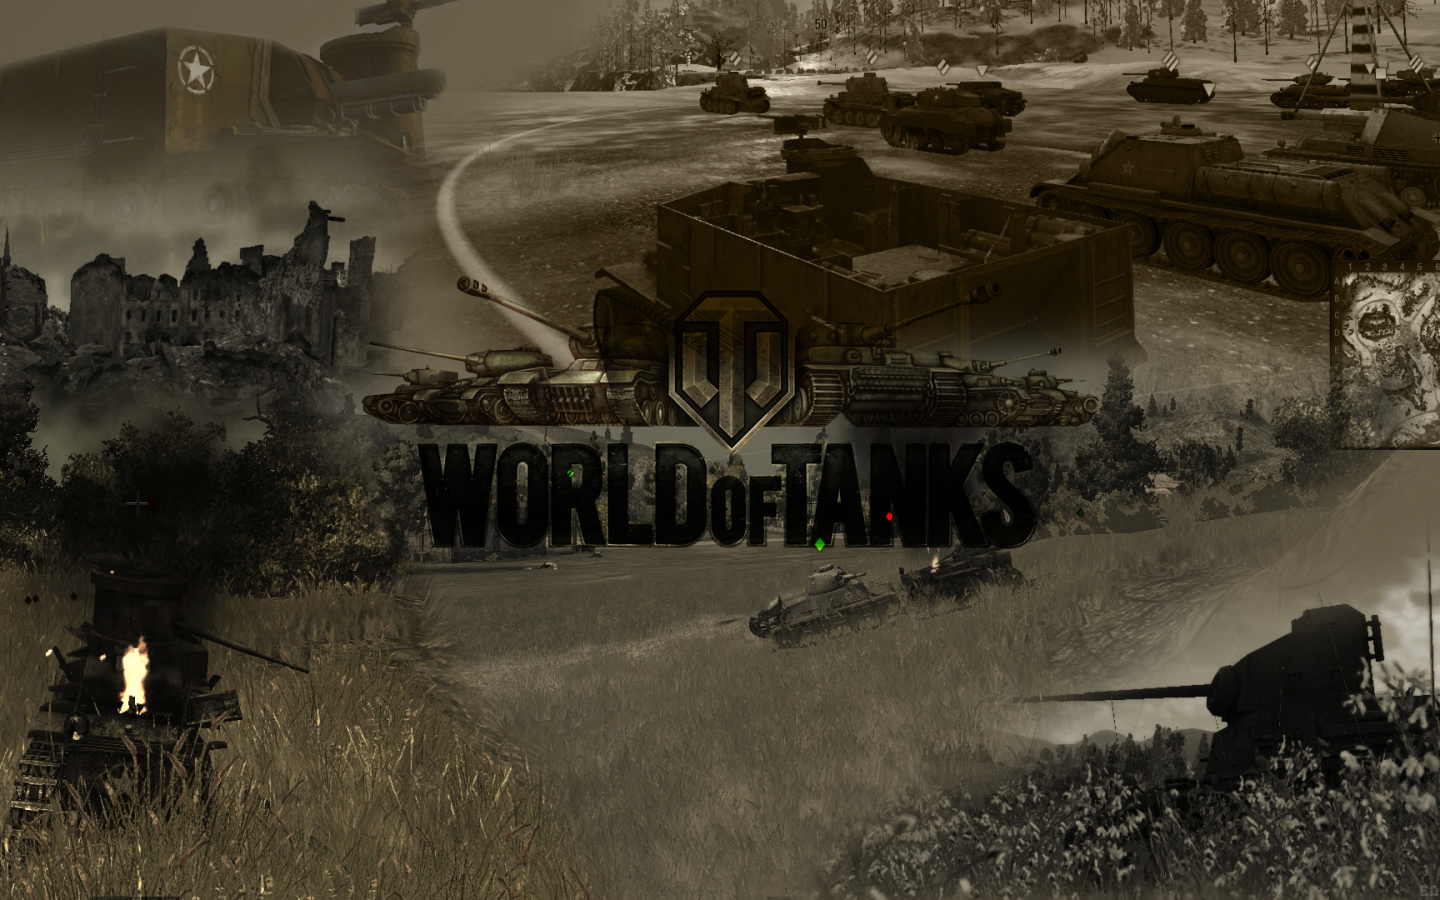 World of Tanks: tank squadron